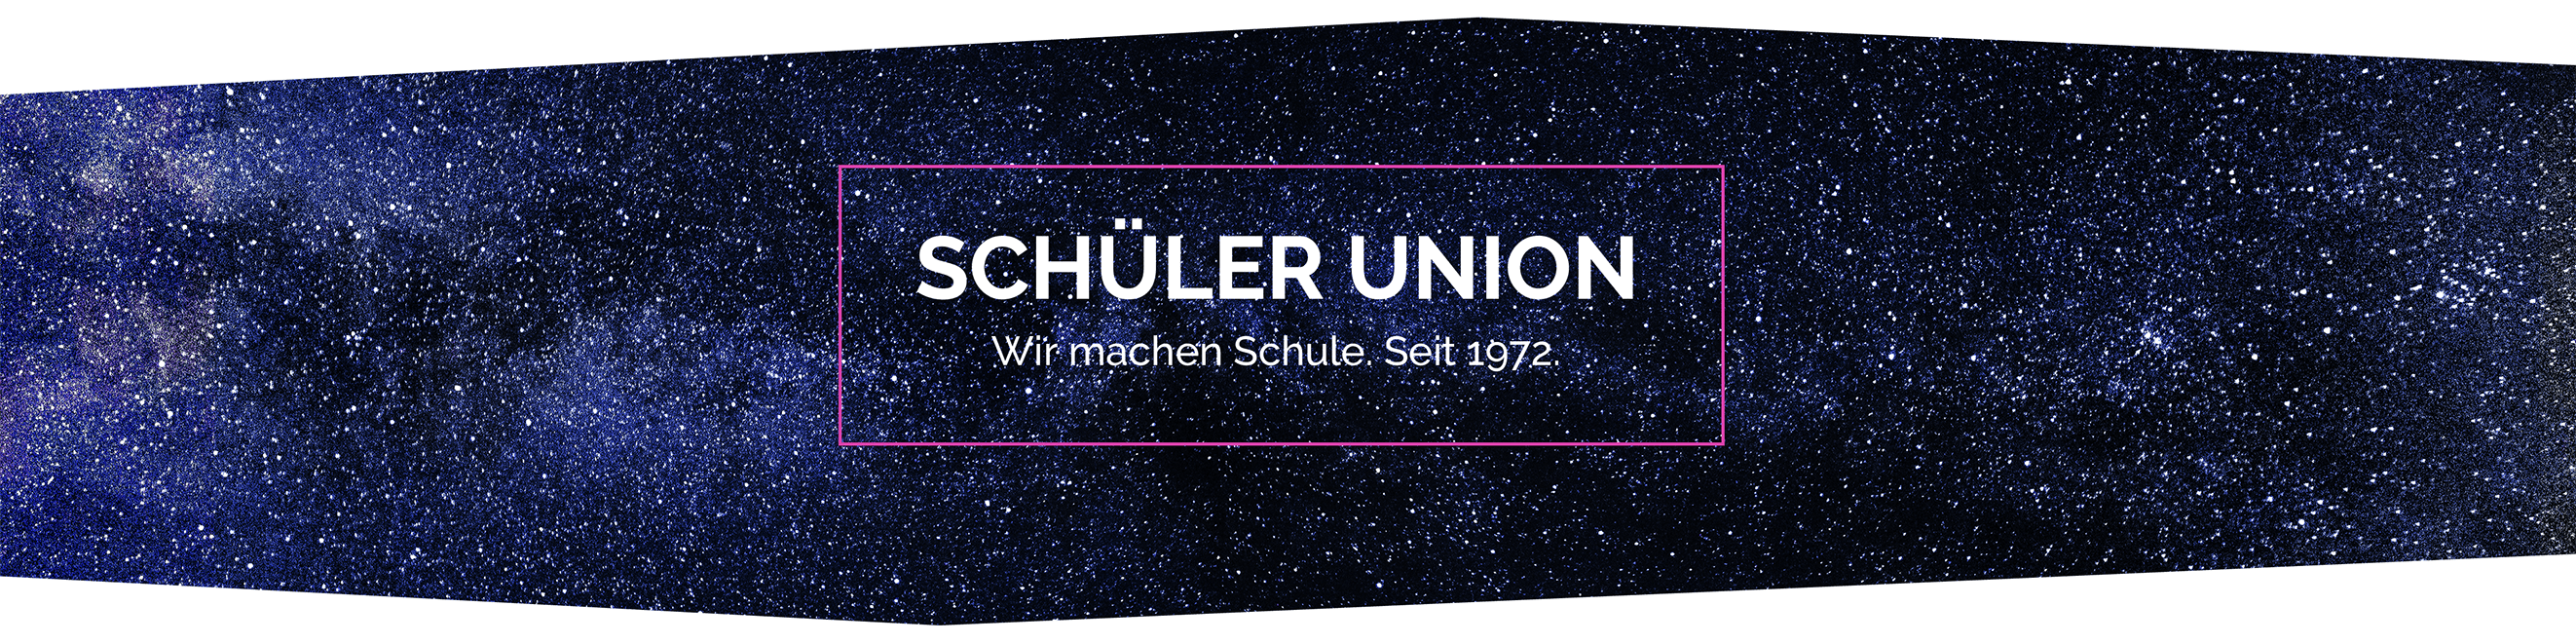 (c) Schueler-union.berlin